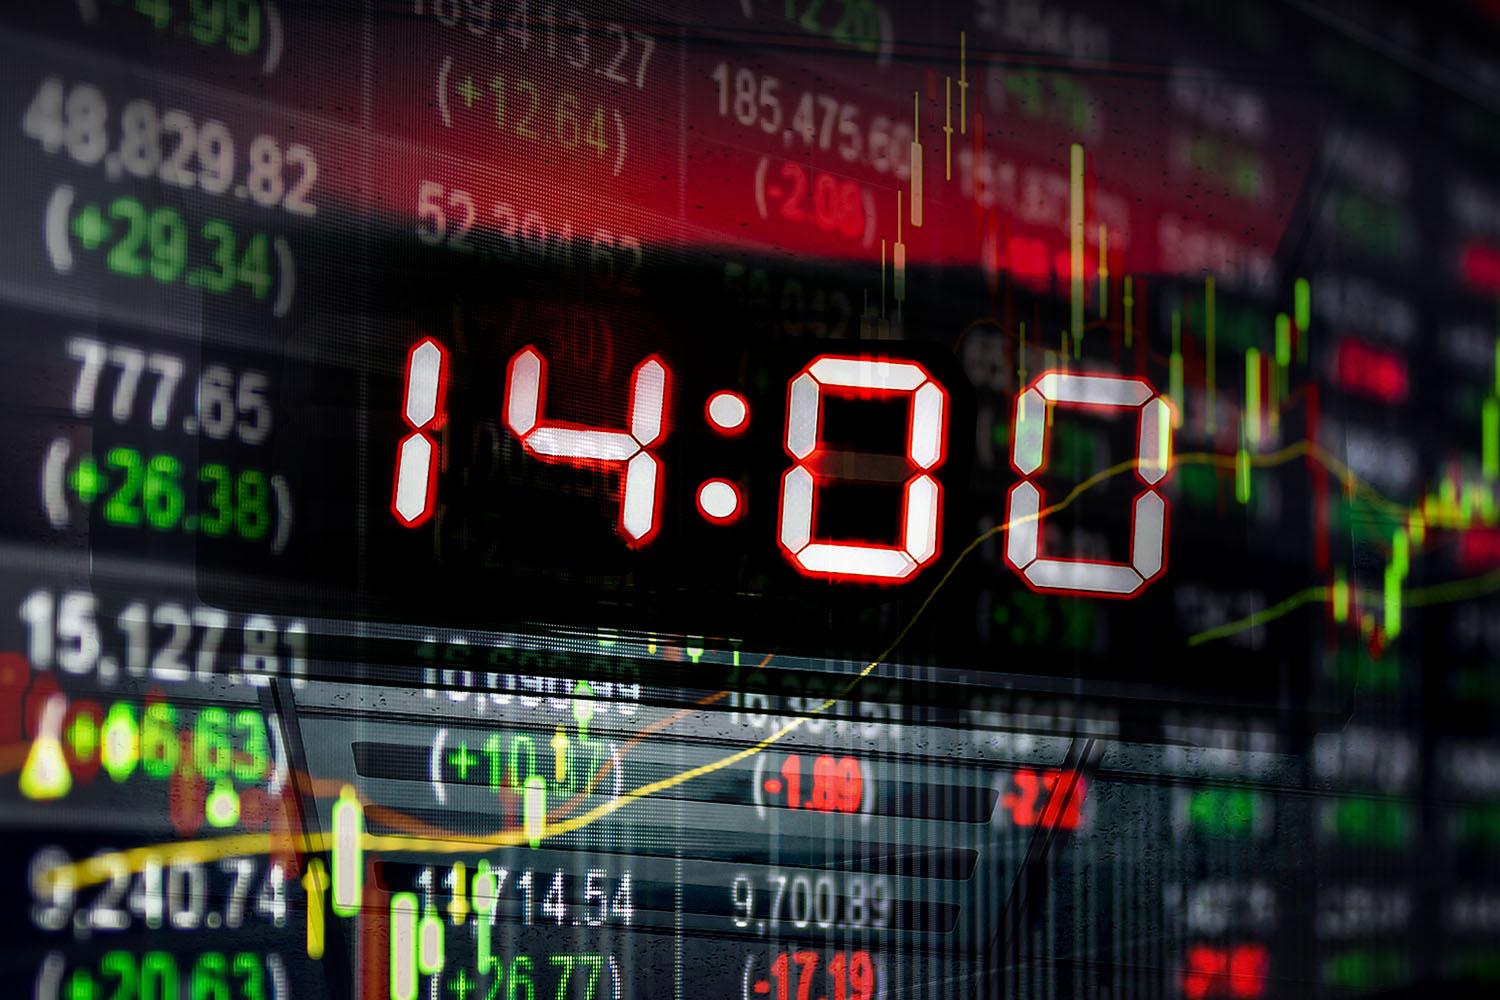 set-stock-market-open-trading-afternoon-faster-30-minutes-SPACEBAR-Hero.jpg